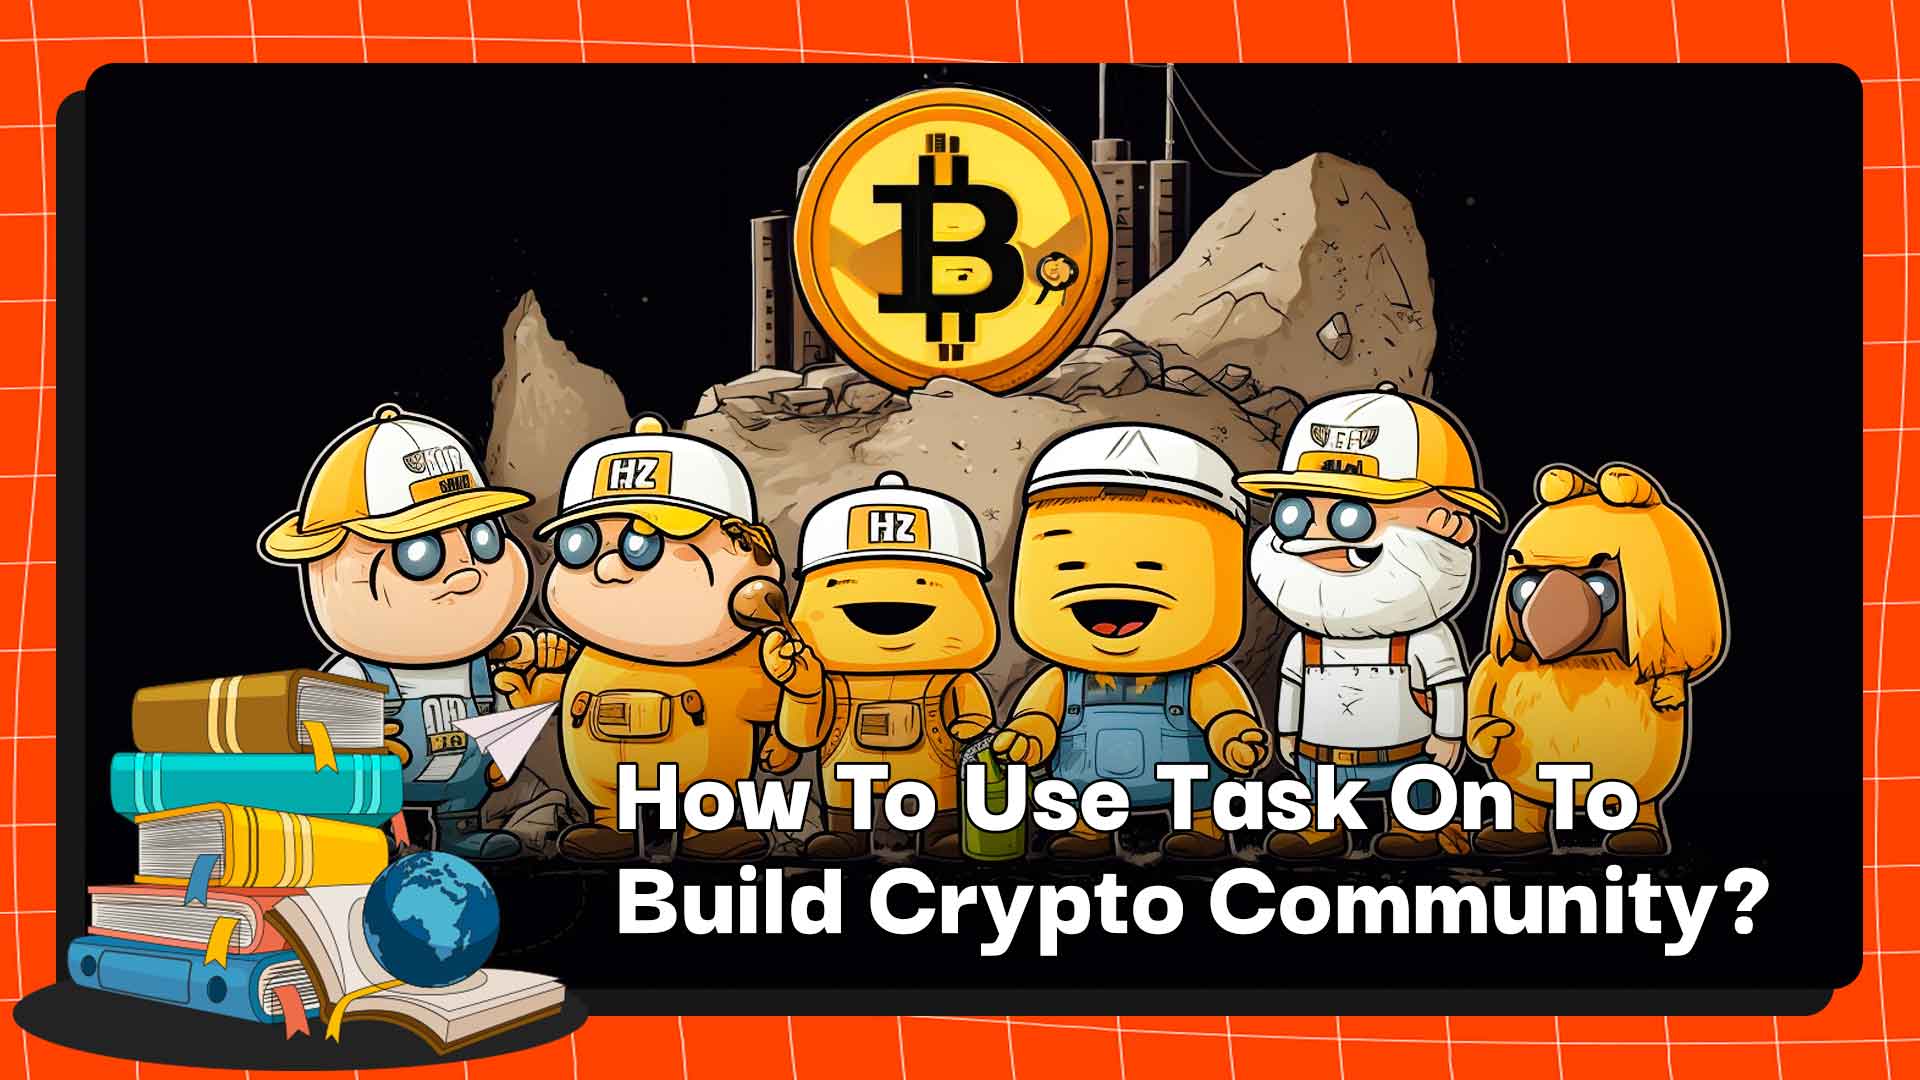 Como usar o TaskOn para construir uma comunidade criptográfica?